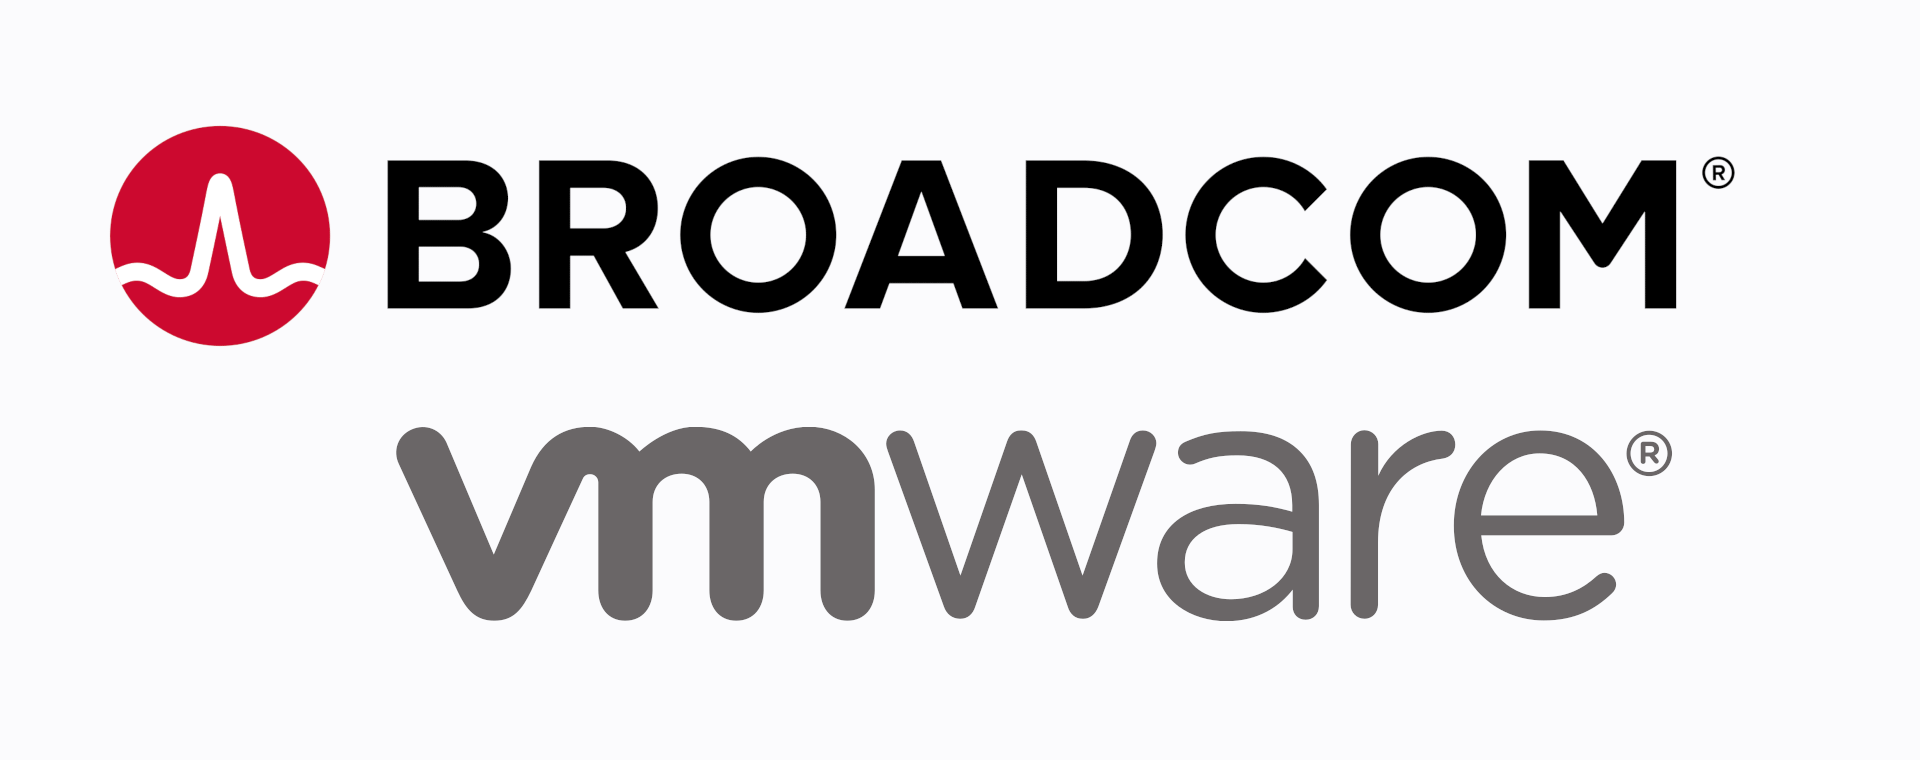 Broadcom Vmware